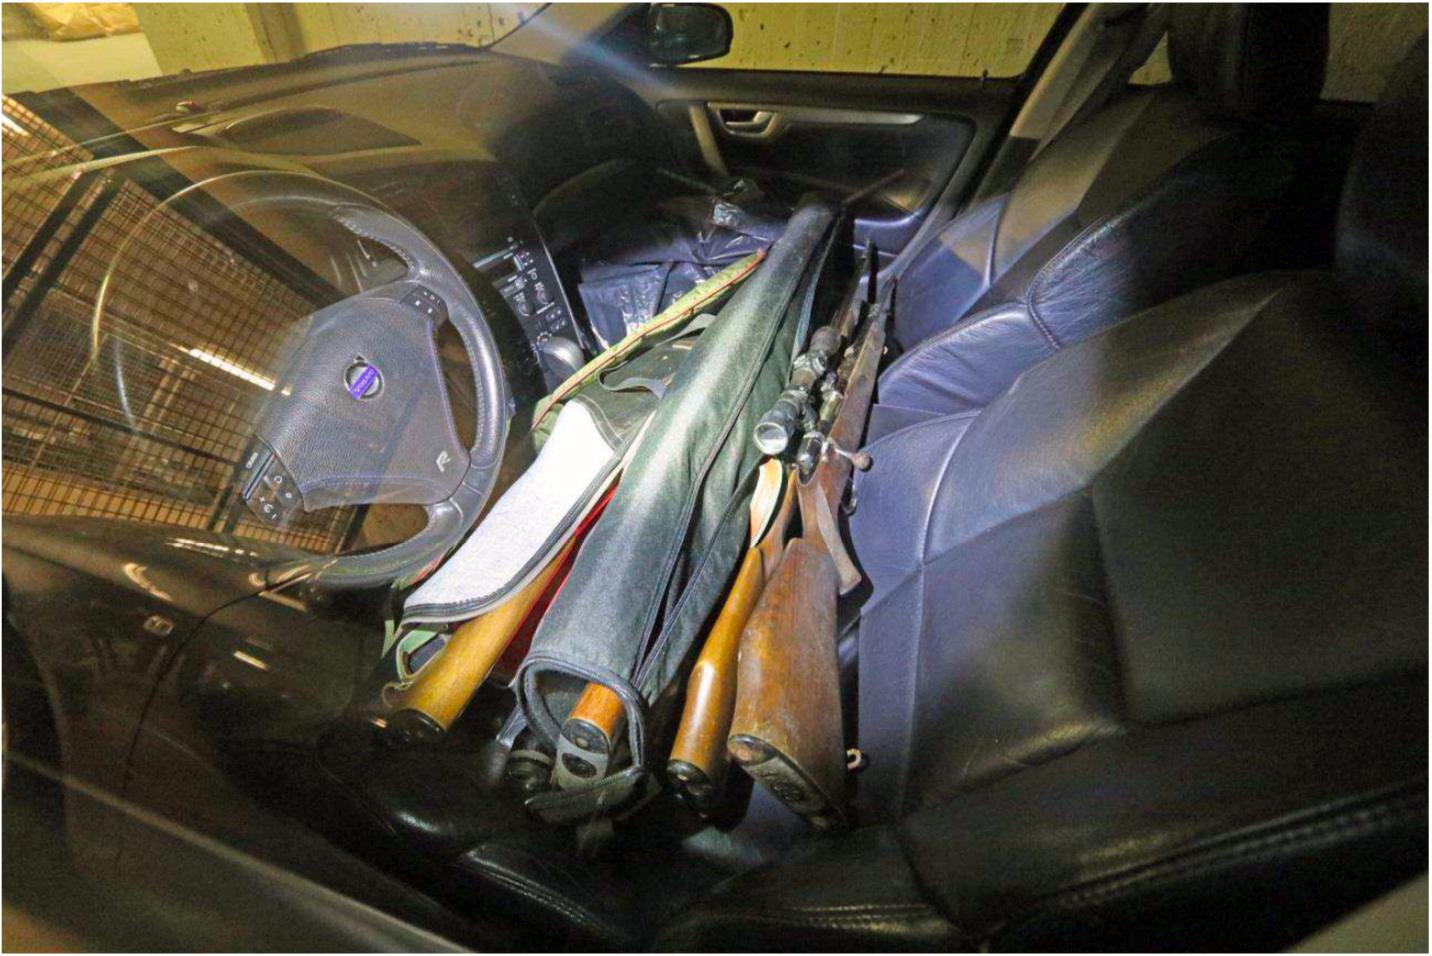 37 illegala vapen hittades i två stulna bilar.